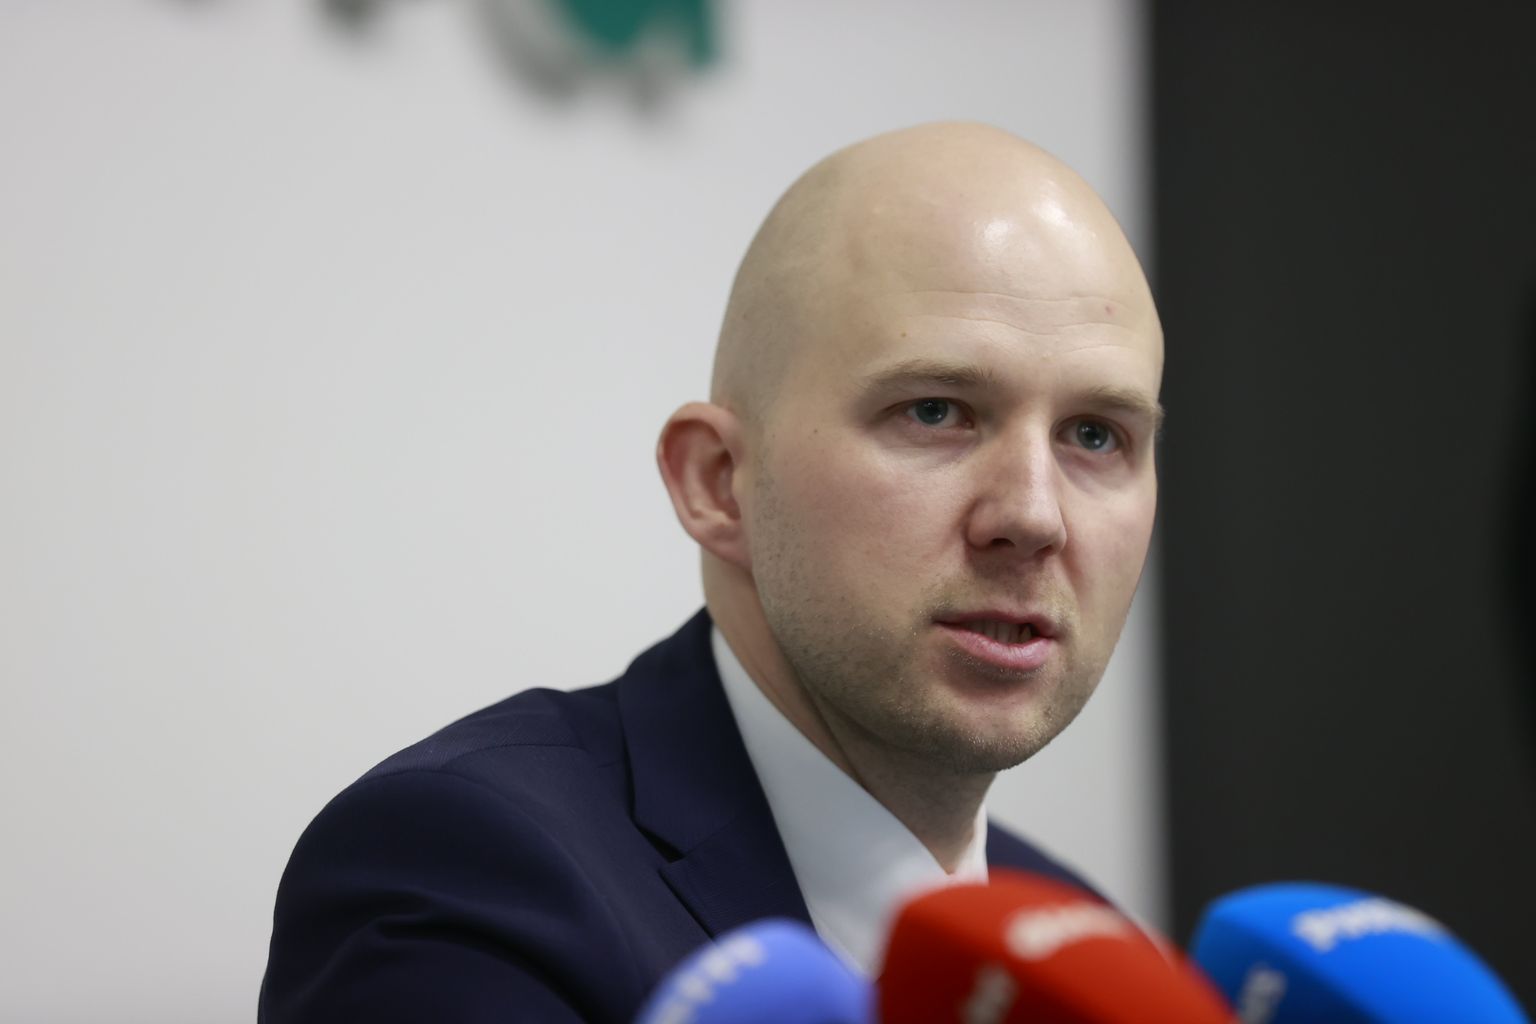 Minister of the Environment Tõnis Mölder (Center Party) steps back.